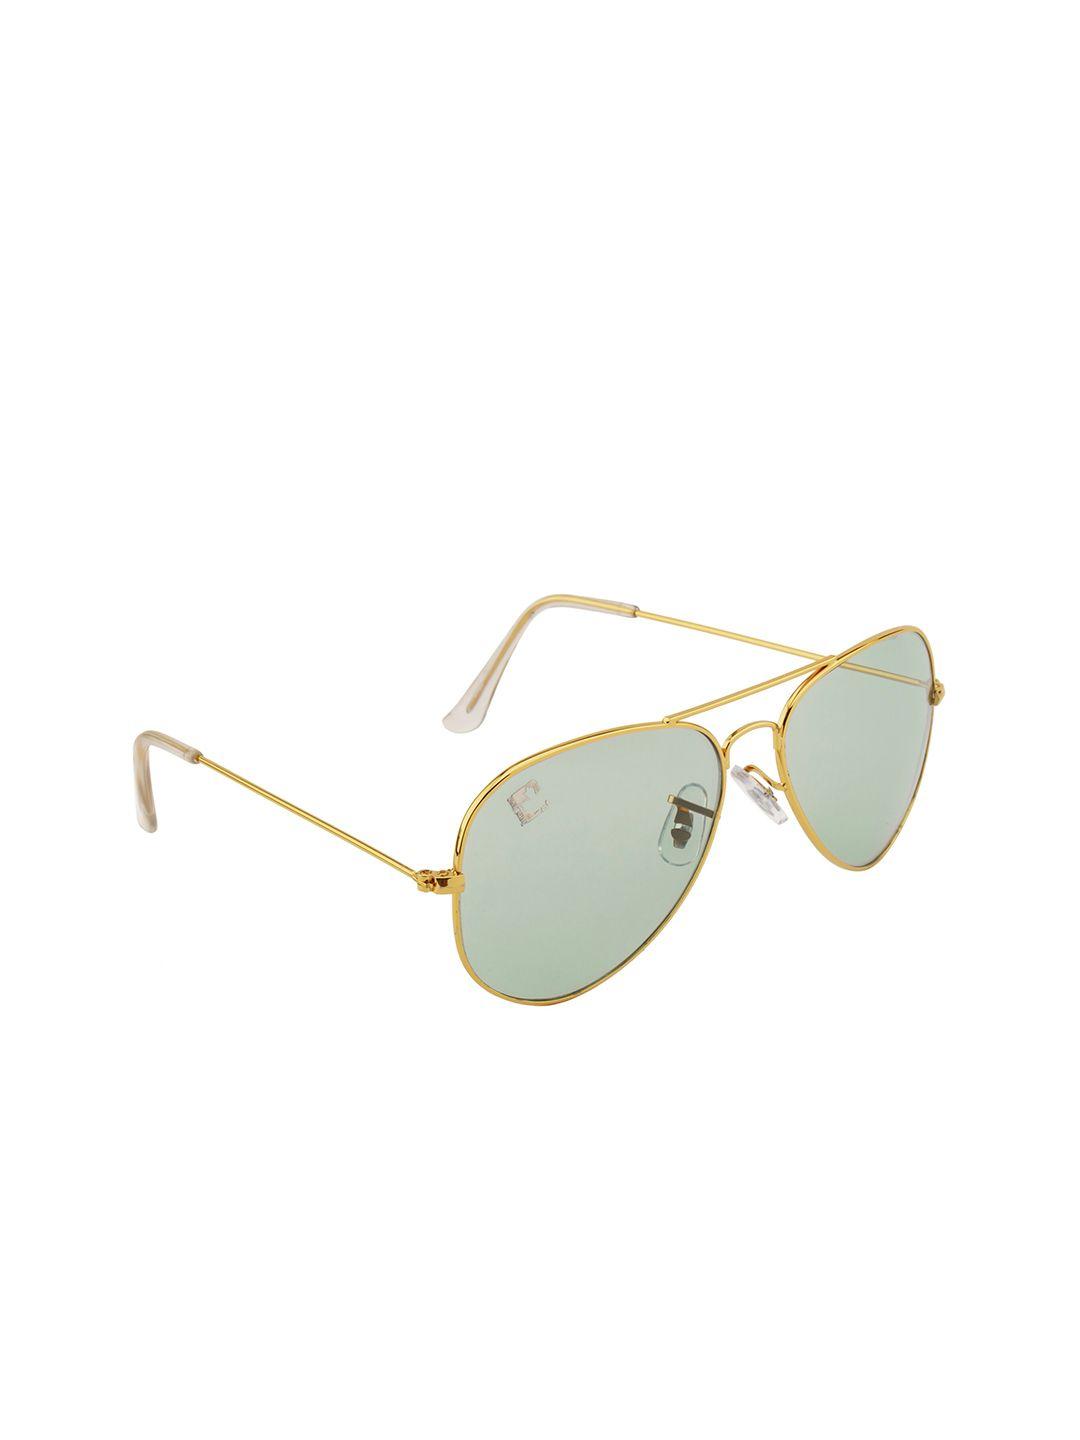 clark n palmer unisex green lens & gold-toned aviator sunglasses with uv protected lens